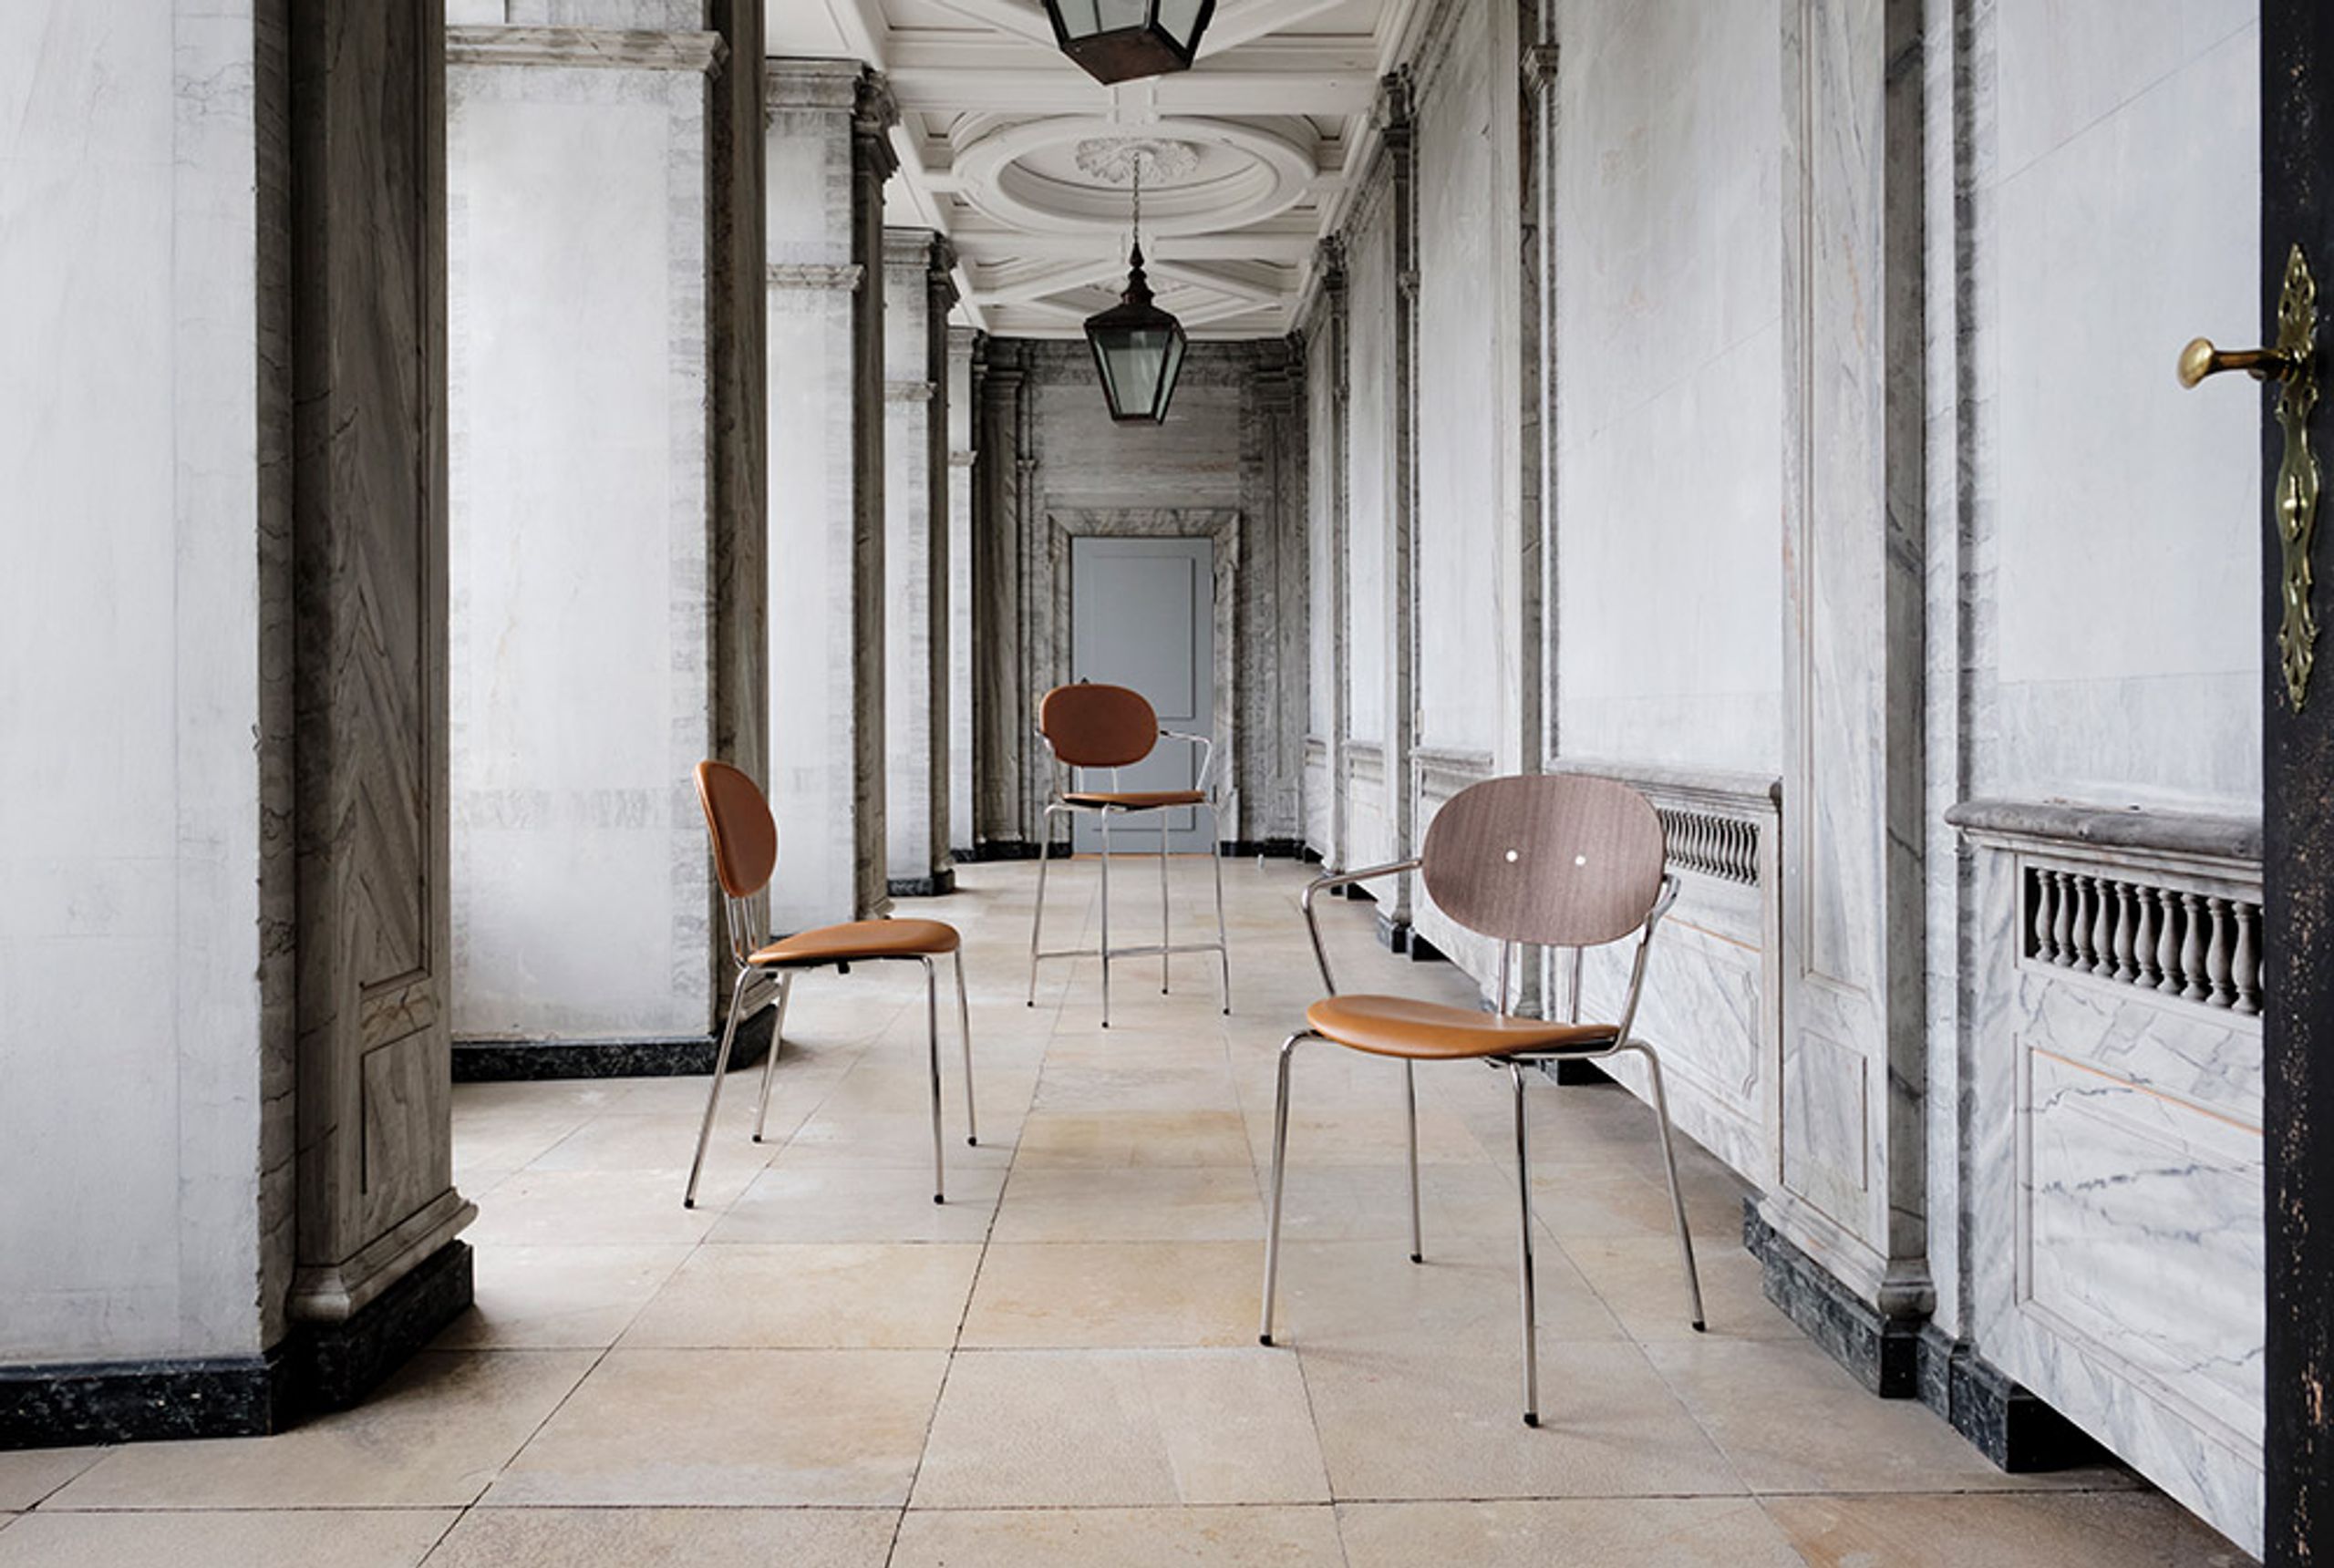 Sibast Furniture - Spisebordsstol - Piet Hein Dining Chair - Natural Oiled Oak / Black